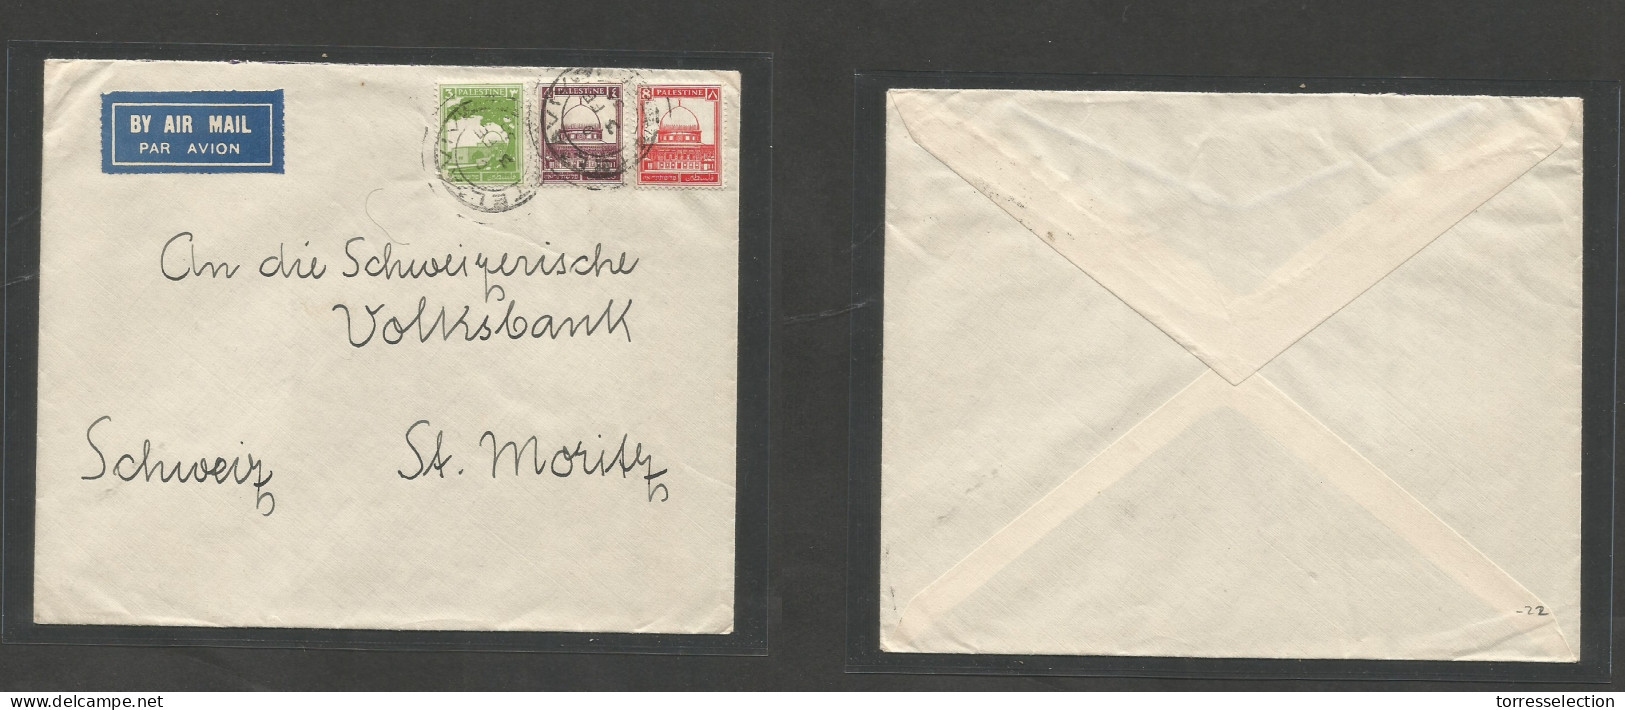 PALESTINE. 1935 (3 Febr) Tel Aviv - Switzerland, St. Moritz. Air Multifkd Tricolor Envelope, Tied Cds. VF Usage. SALE. - Palestine